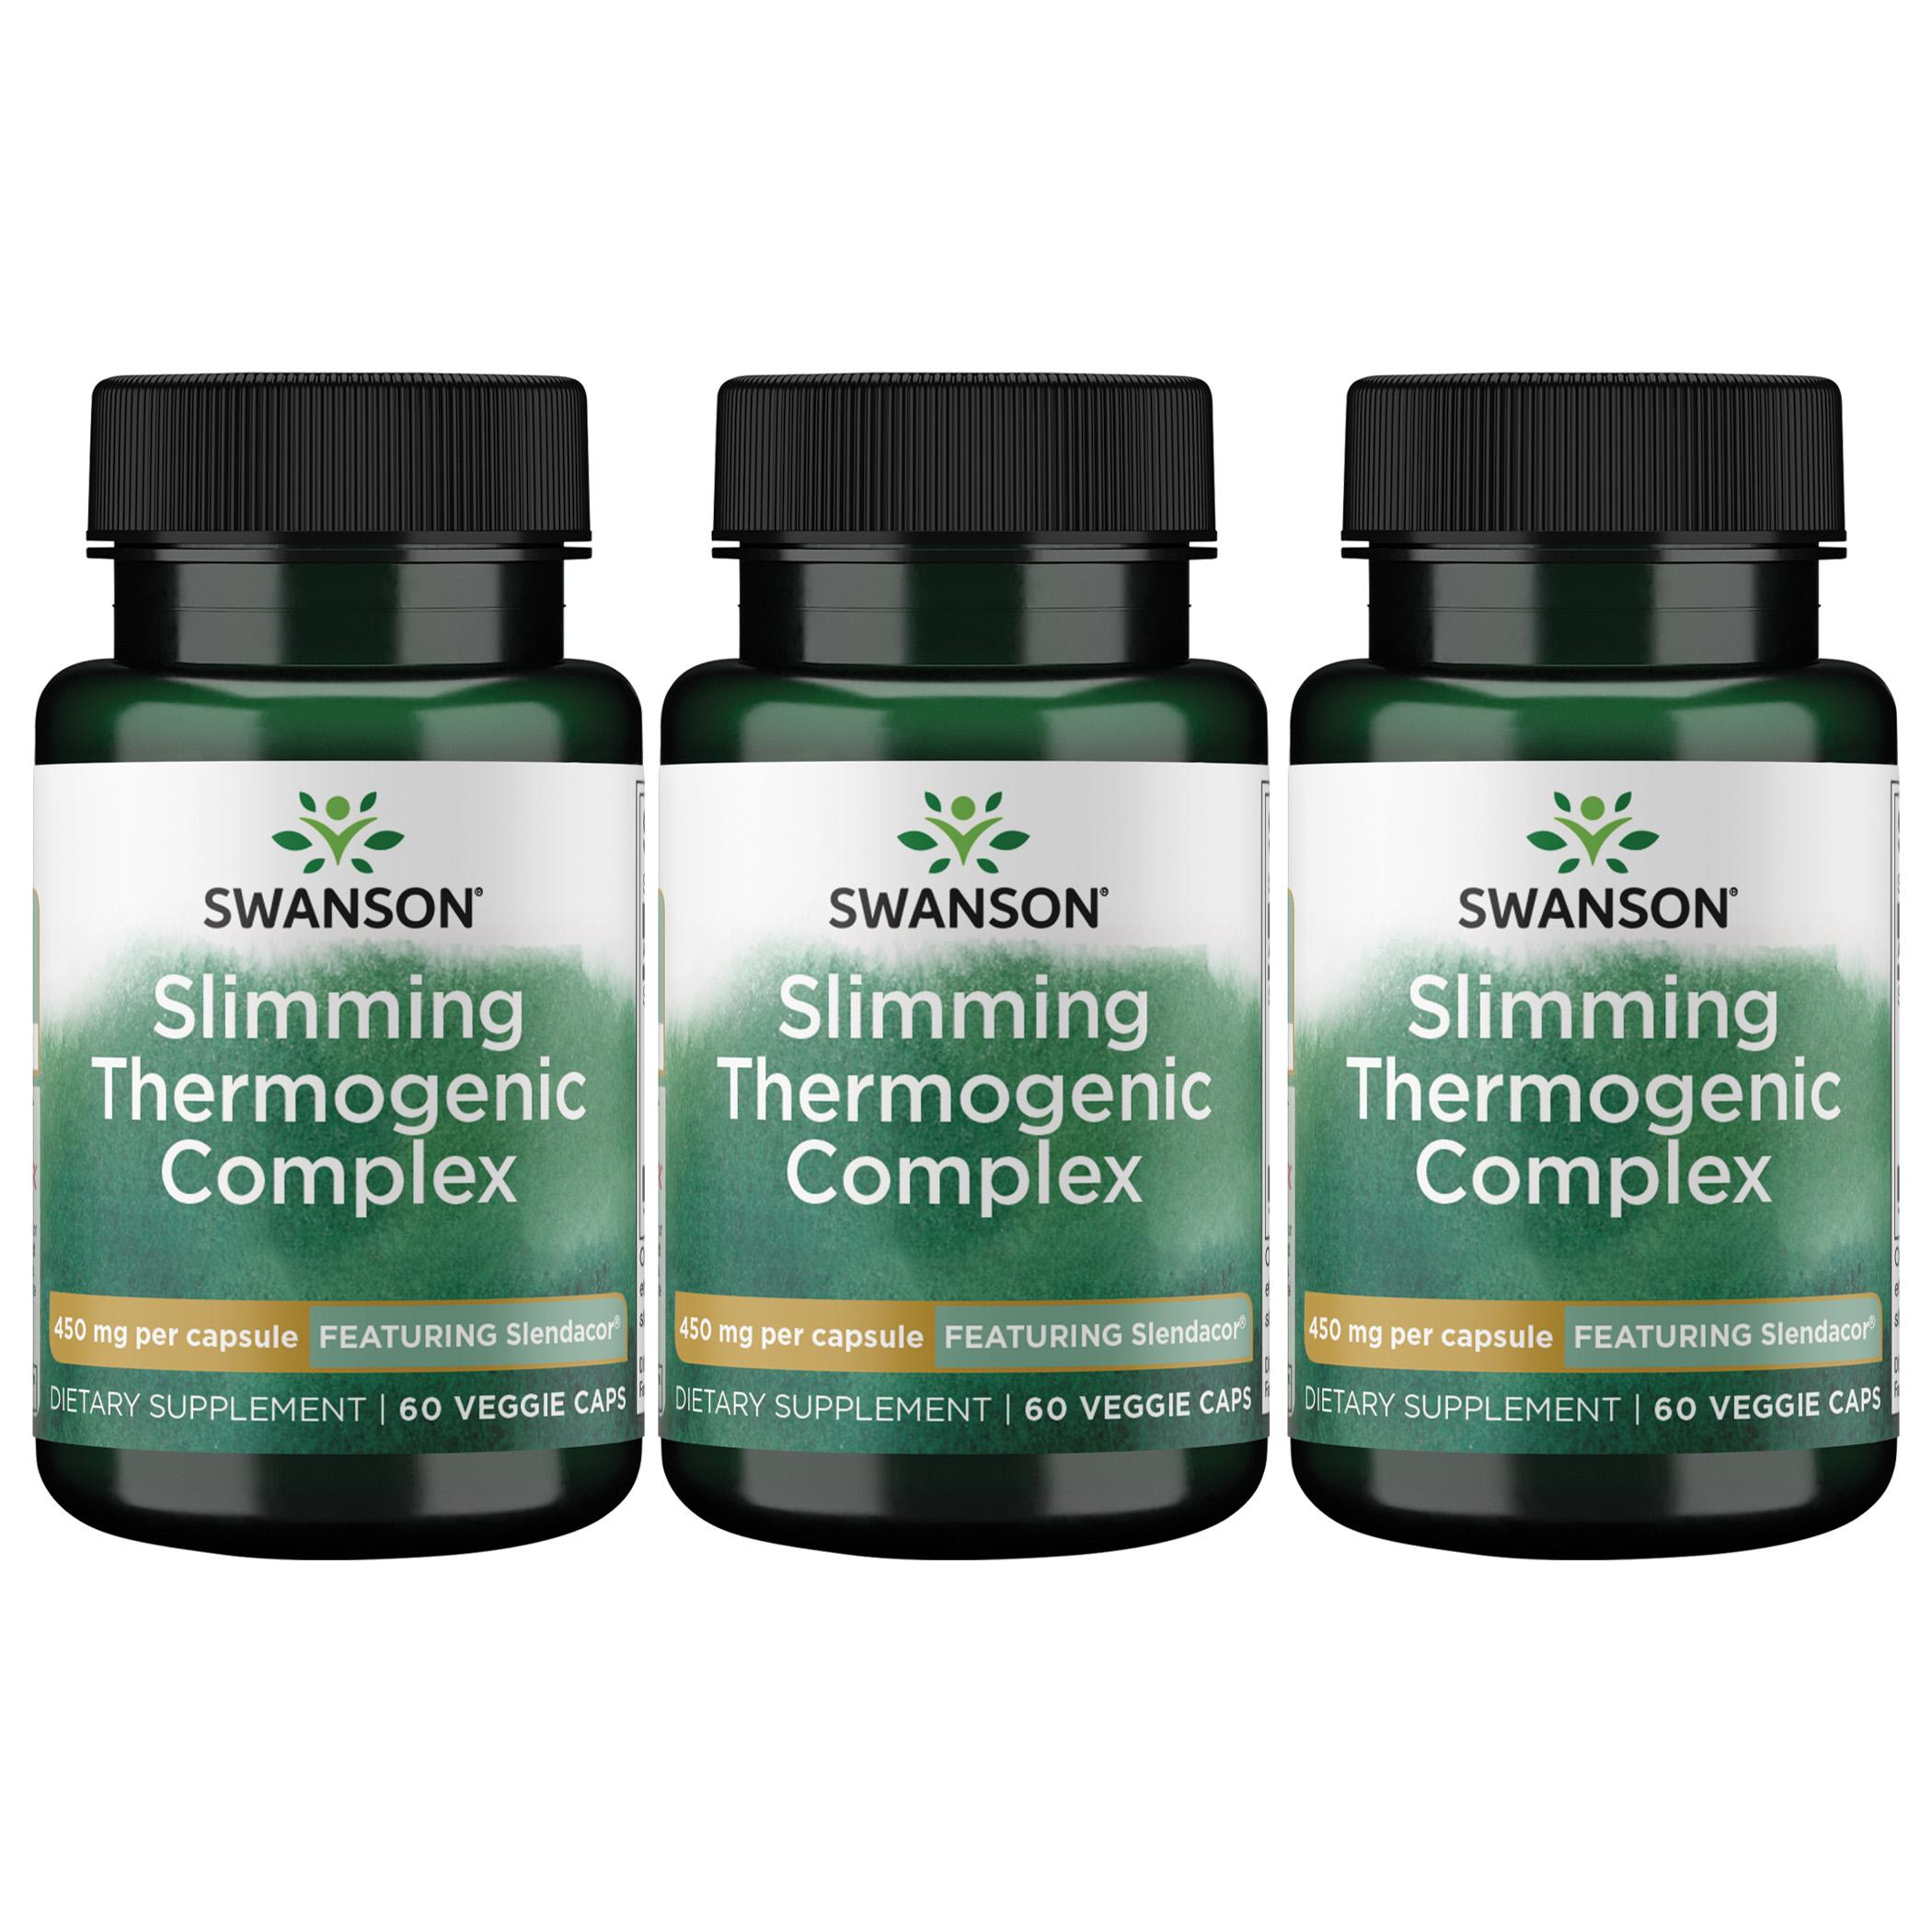 Swanson Premium Slimming Thermogenic Complex - Featuring Slendacor 3 Pack Vitamin 450 mg 60 Veg Caps Weight Management